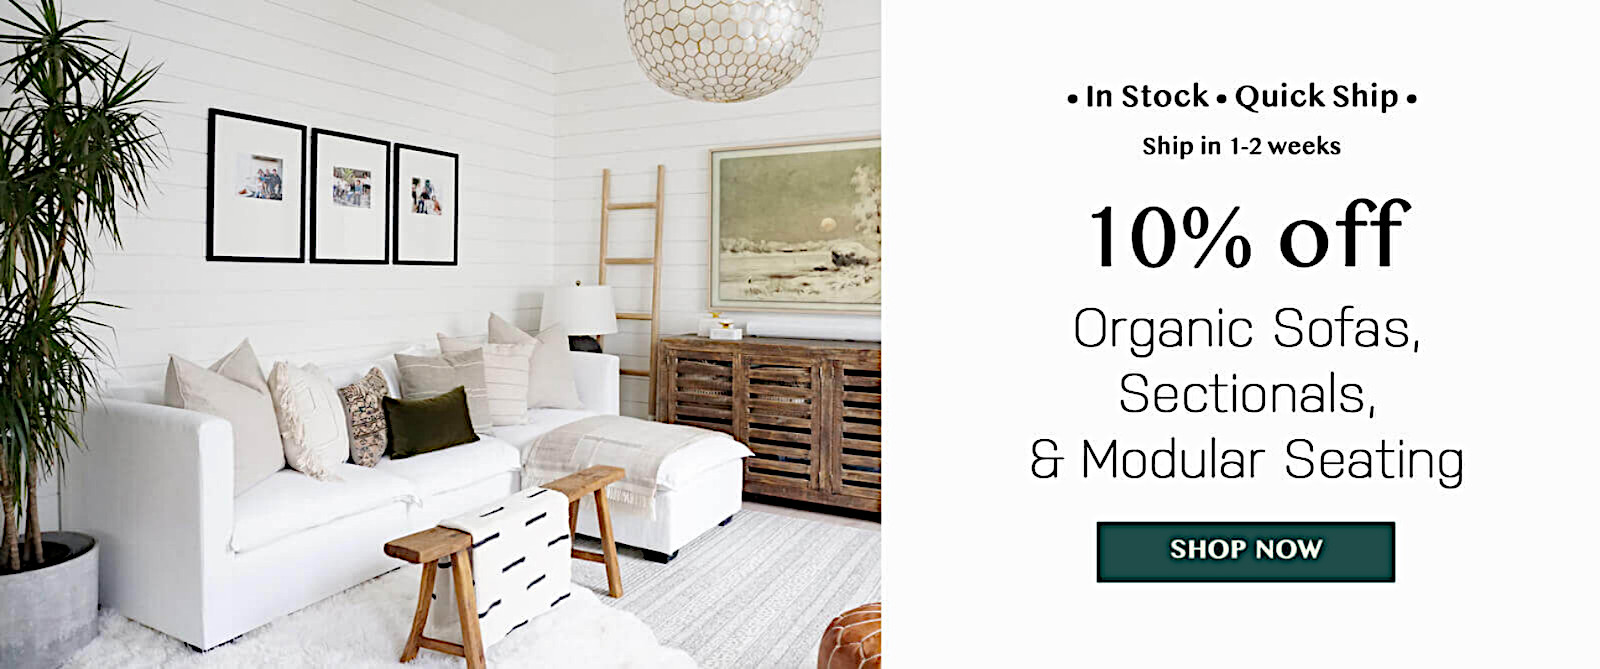 Cheap organic sofas sectionals modular seating